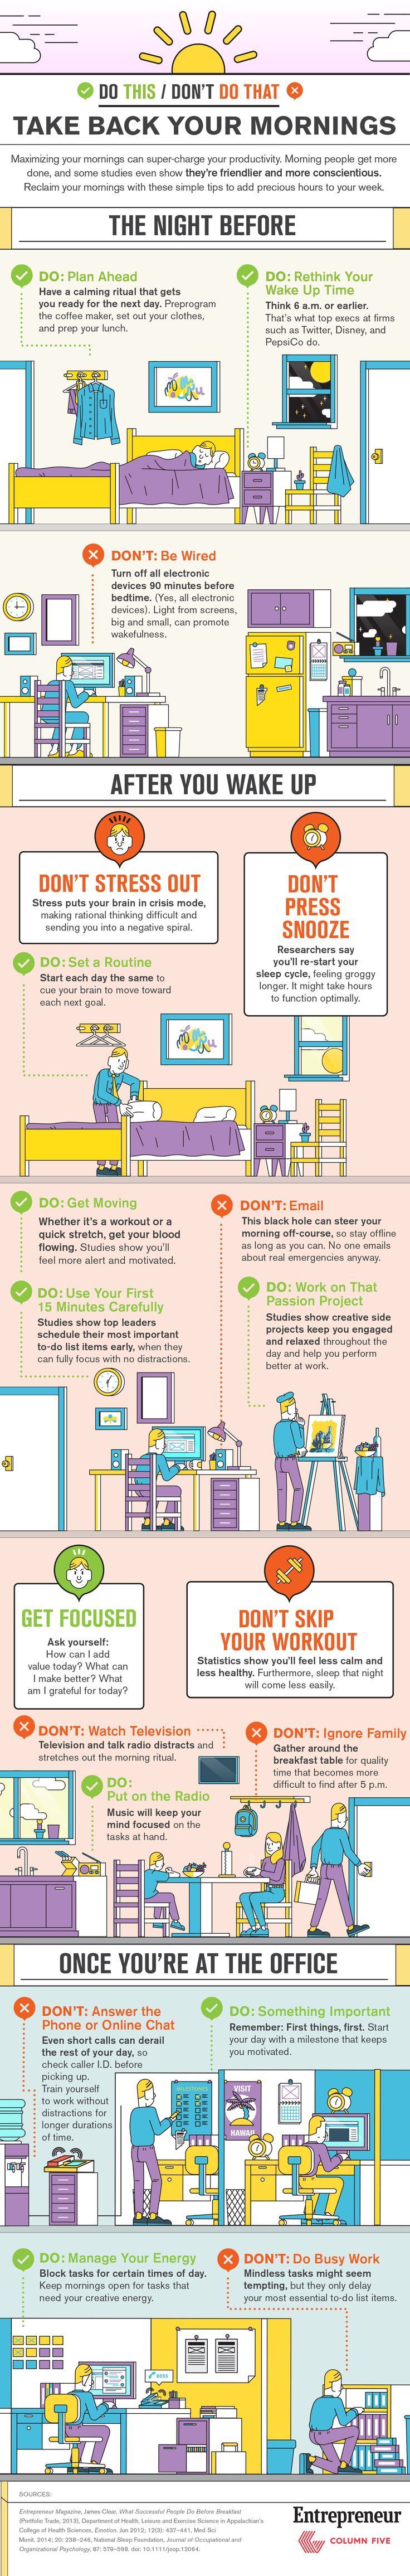 Take Back Your Mornings (Infographic) | Entrepreneur